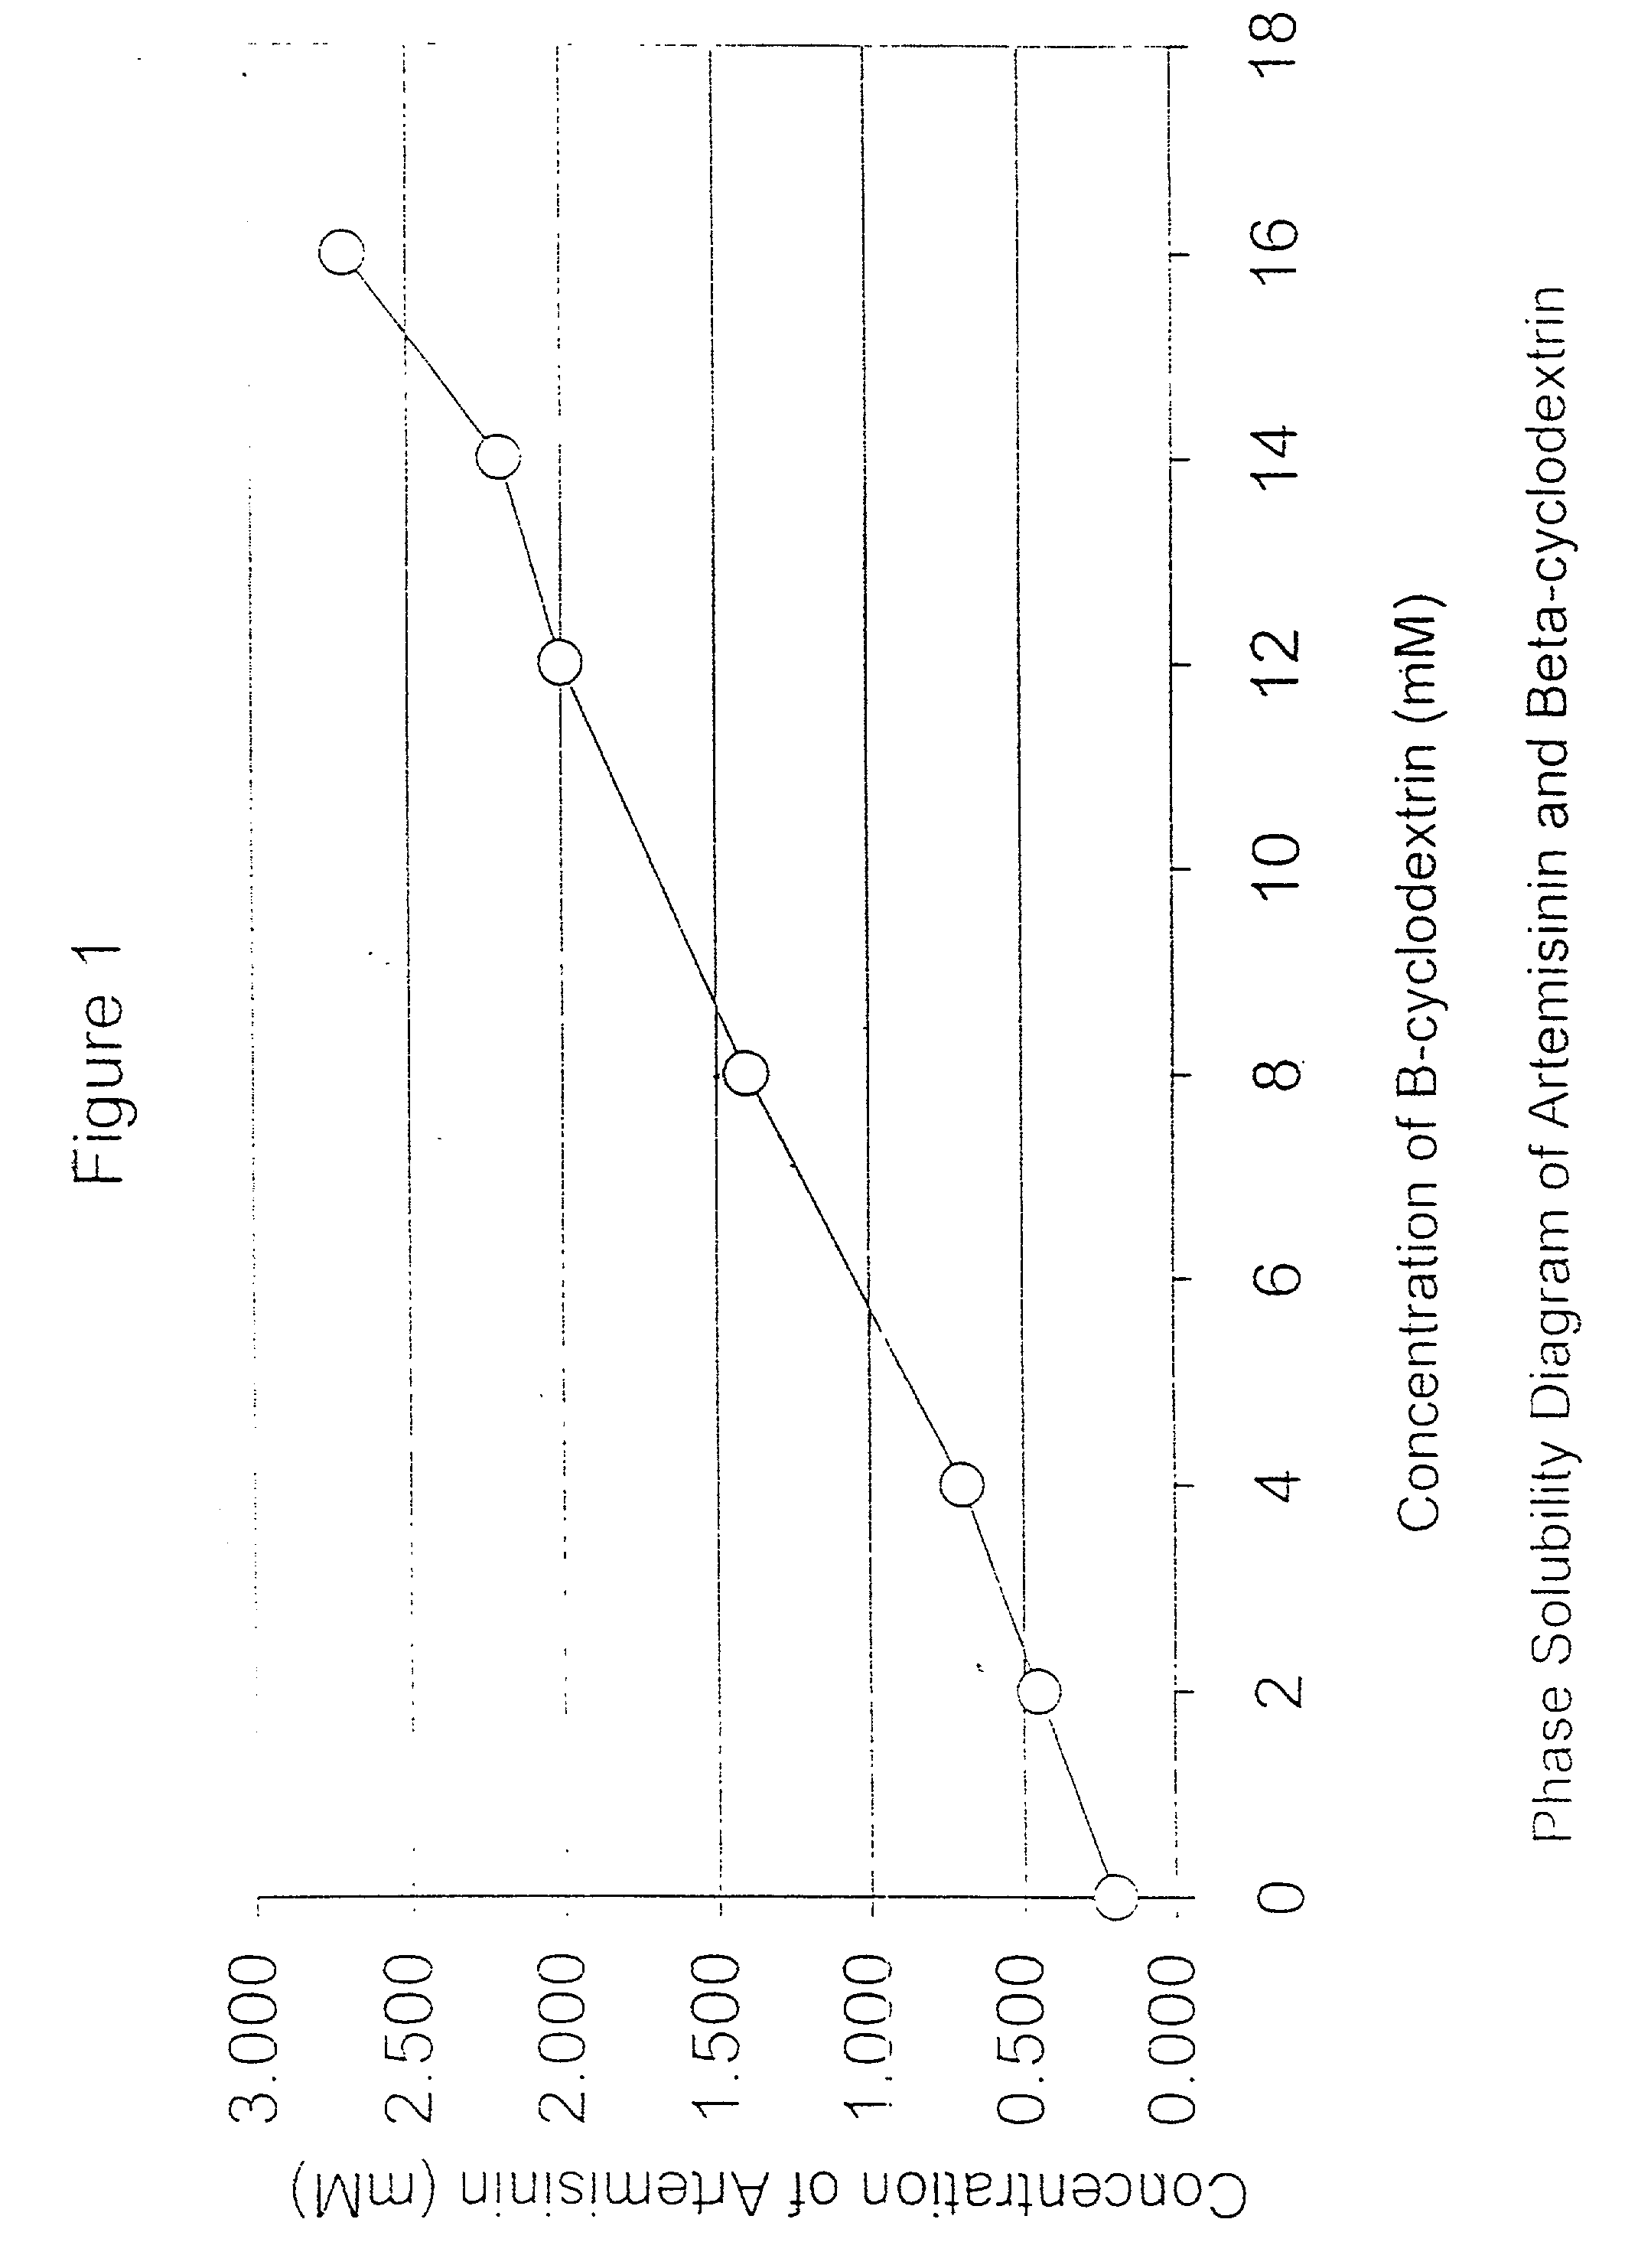 Formulation of artemisinin